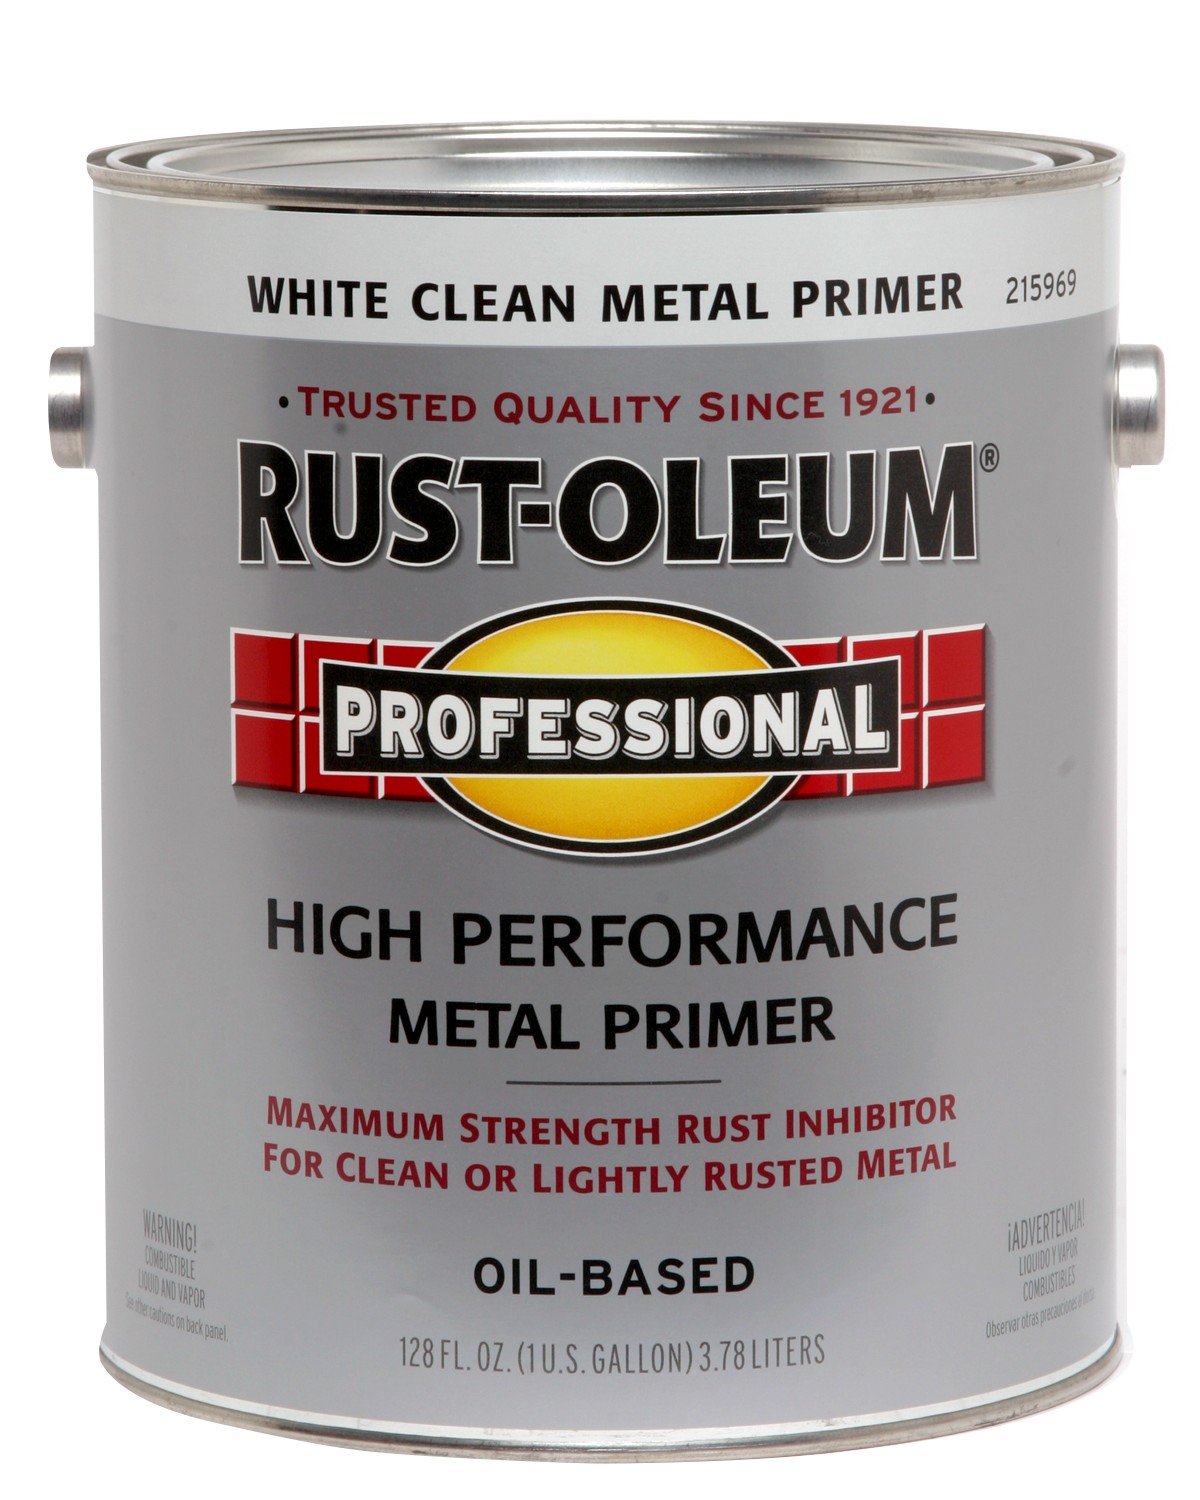 Rust-Oleum Professional Protective Enamel Gallon White Primer - 215969